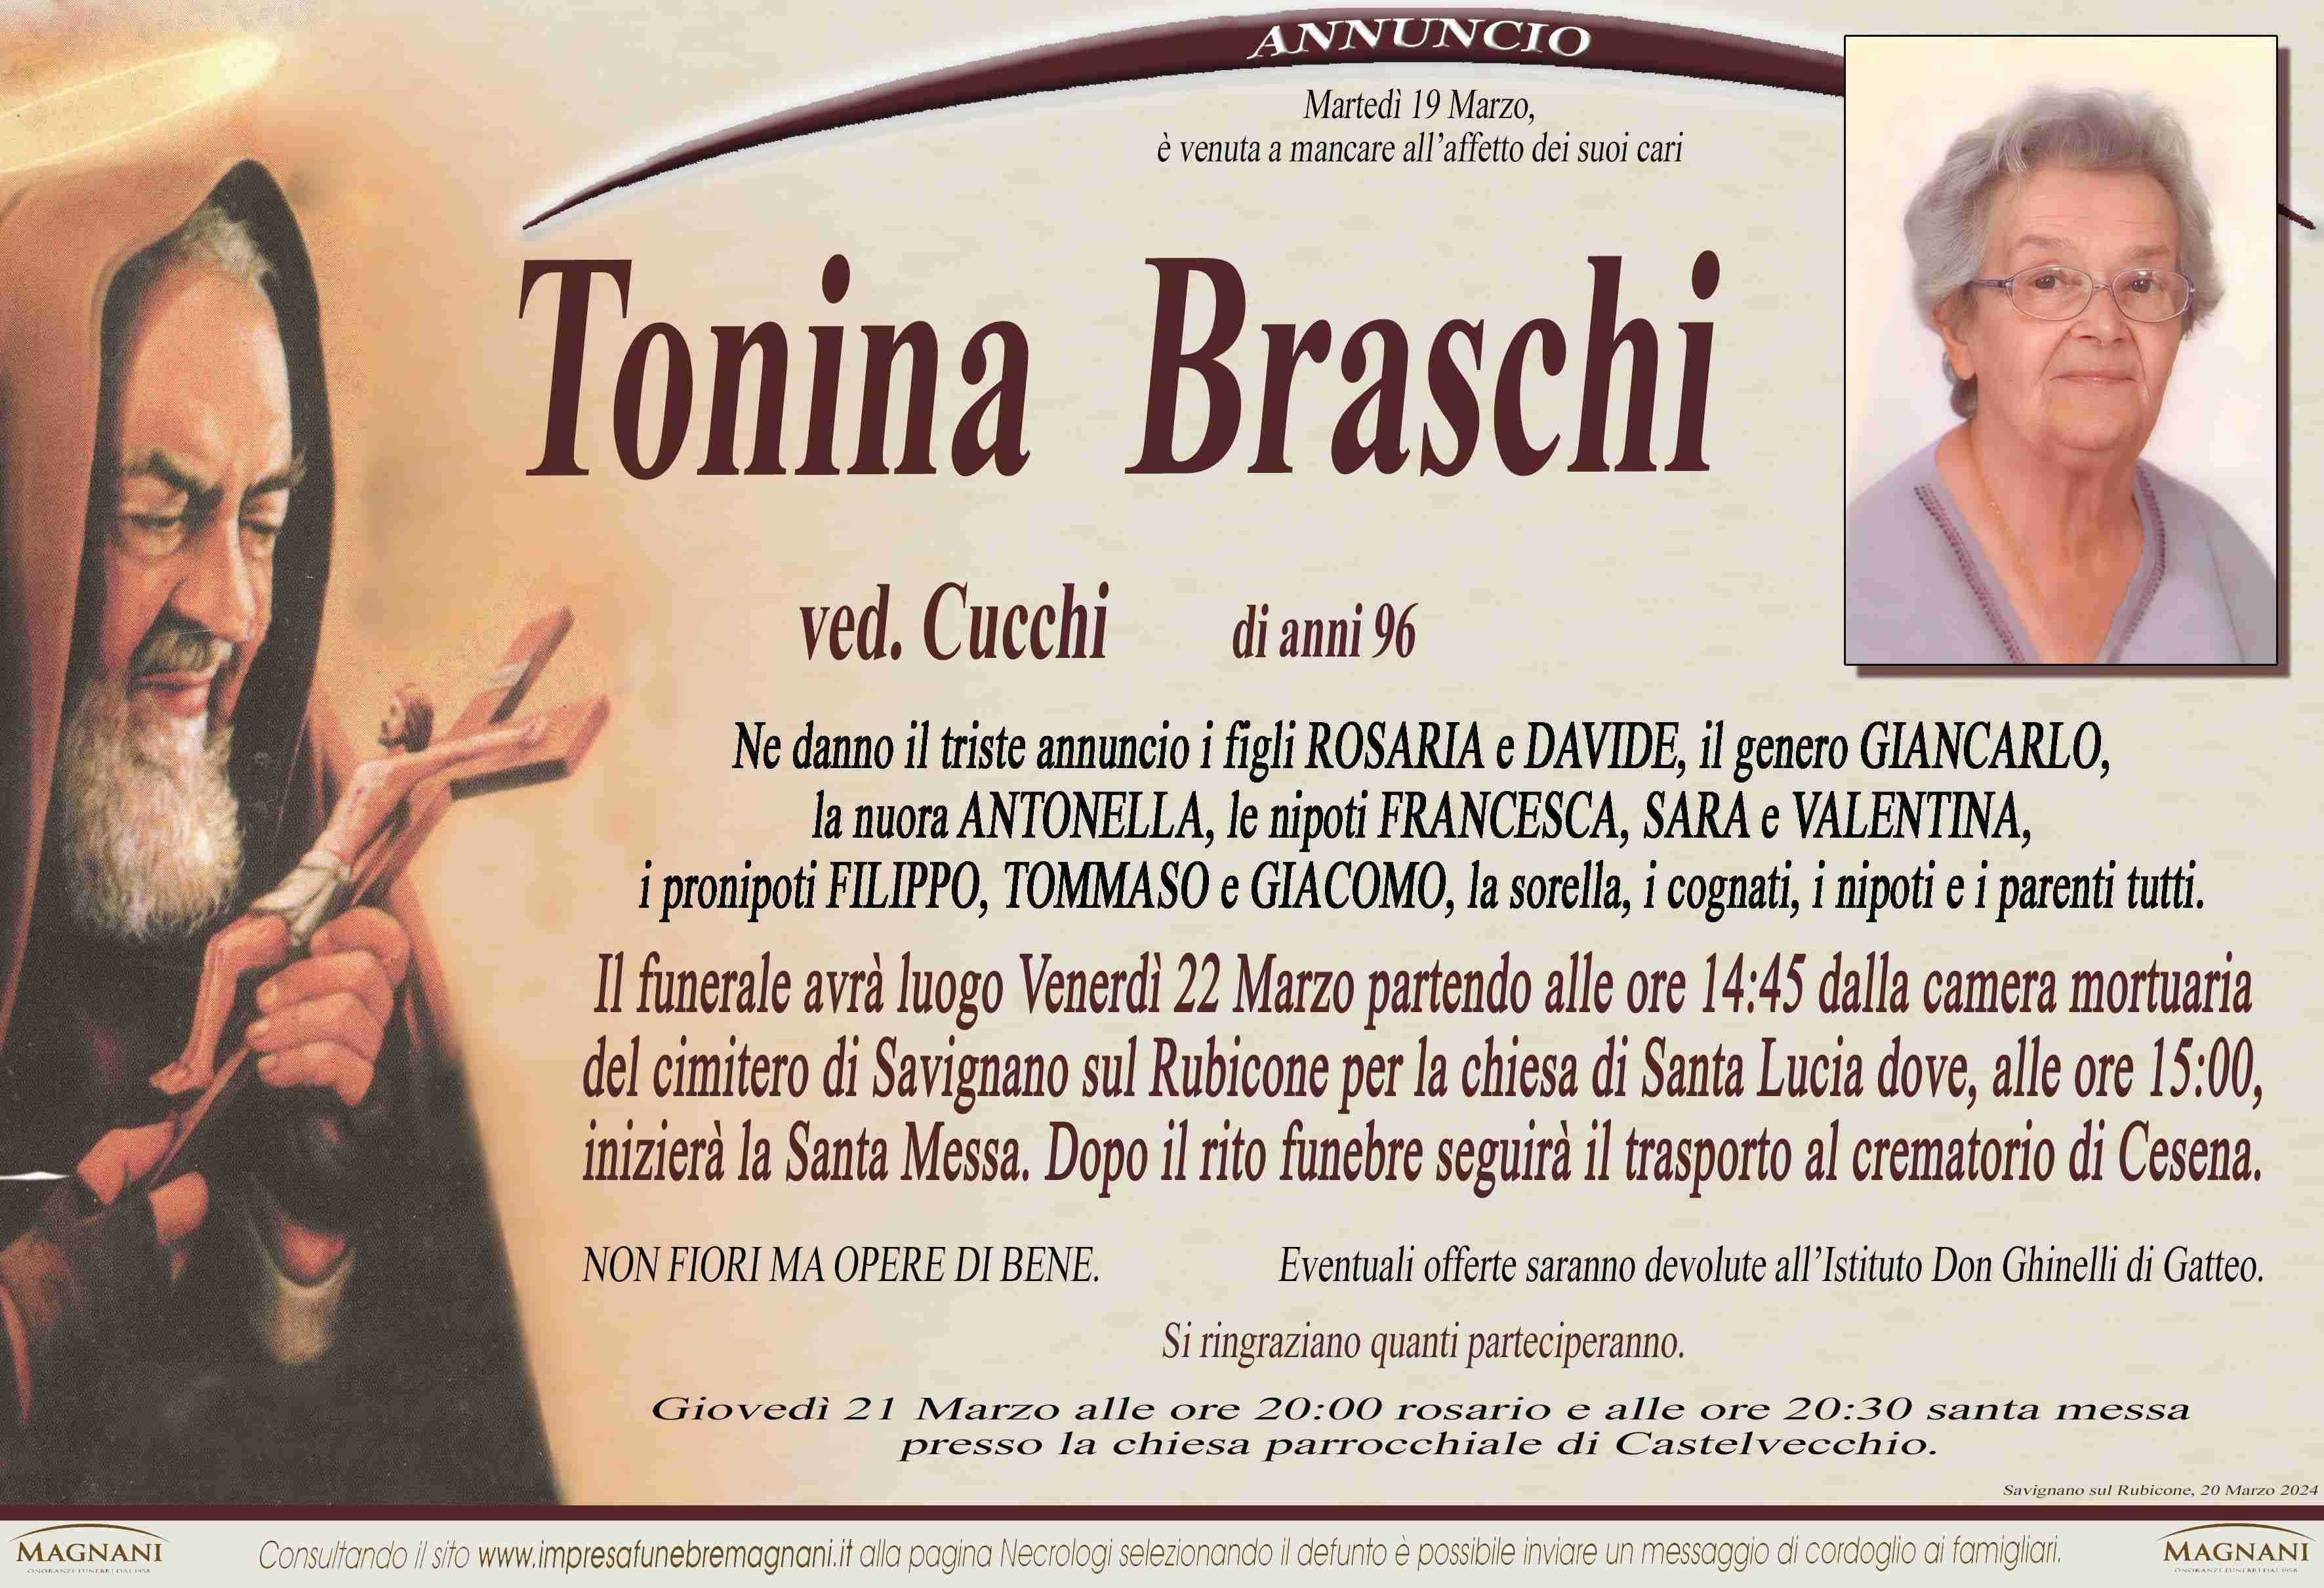 Tonina Braschi